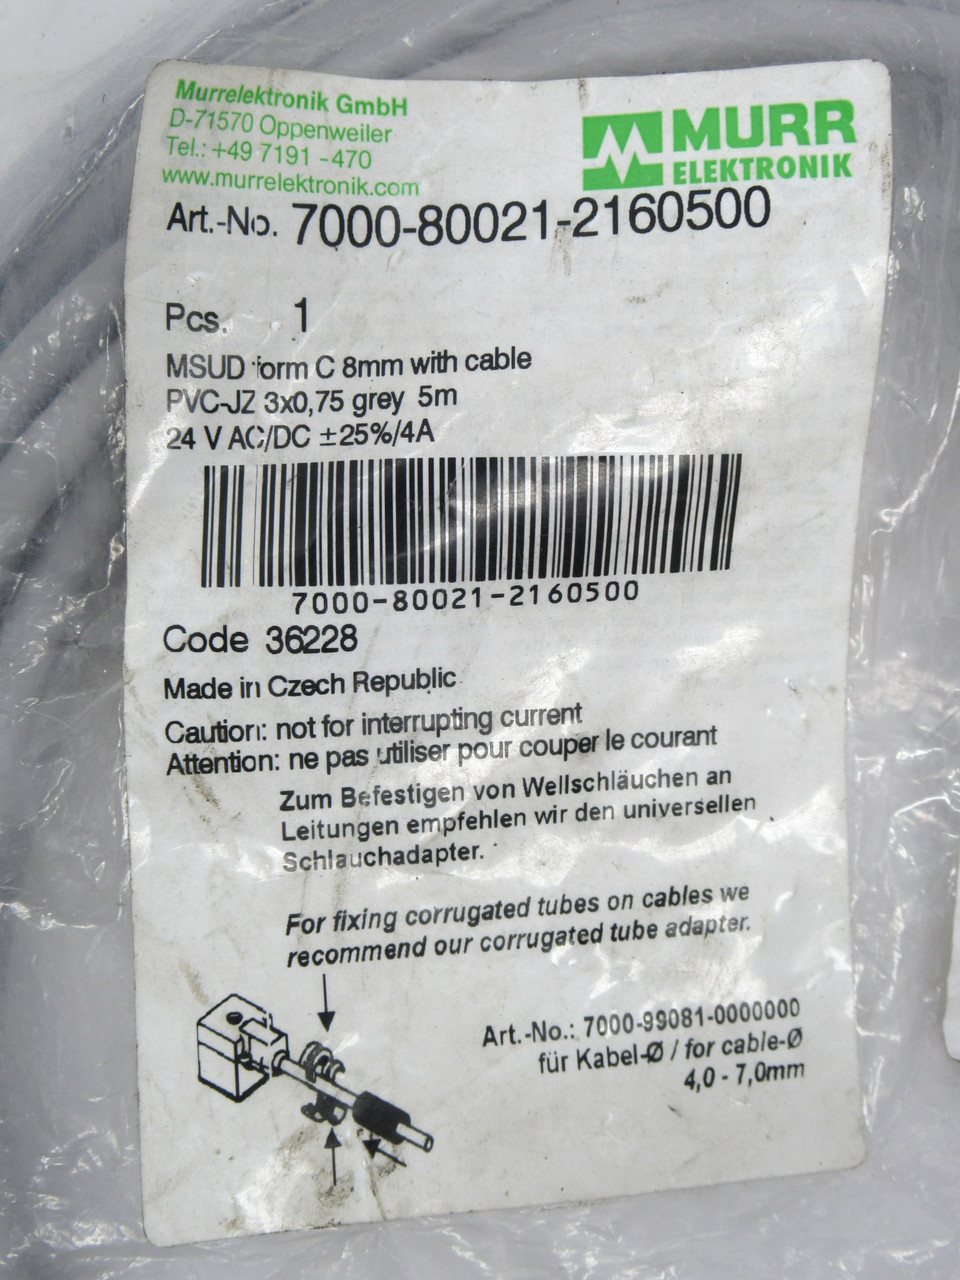 Murrelektronik 7000-80021-2160500 Valve Plug C 8mm W/ Cable *Sealed Bag* NWB